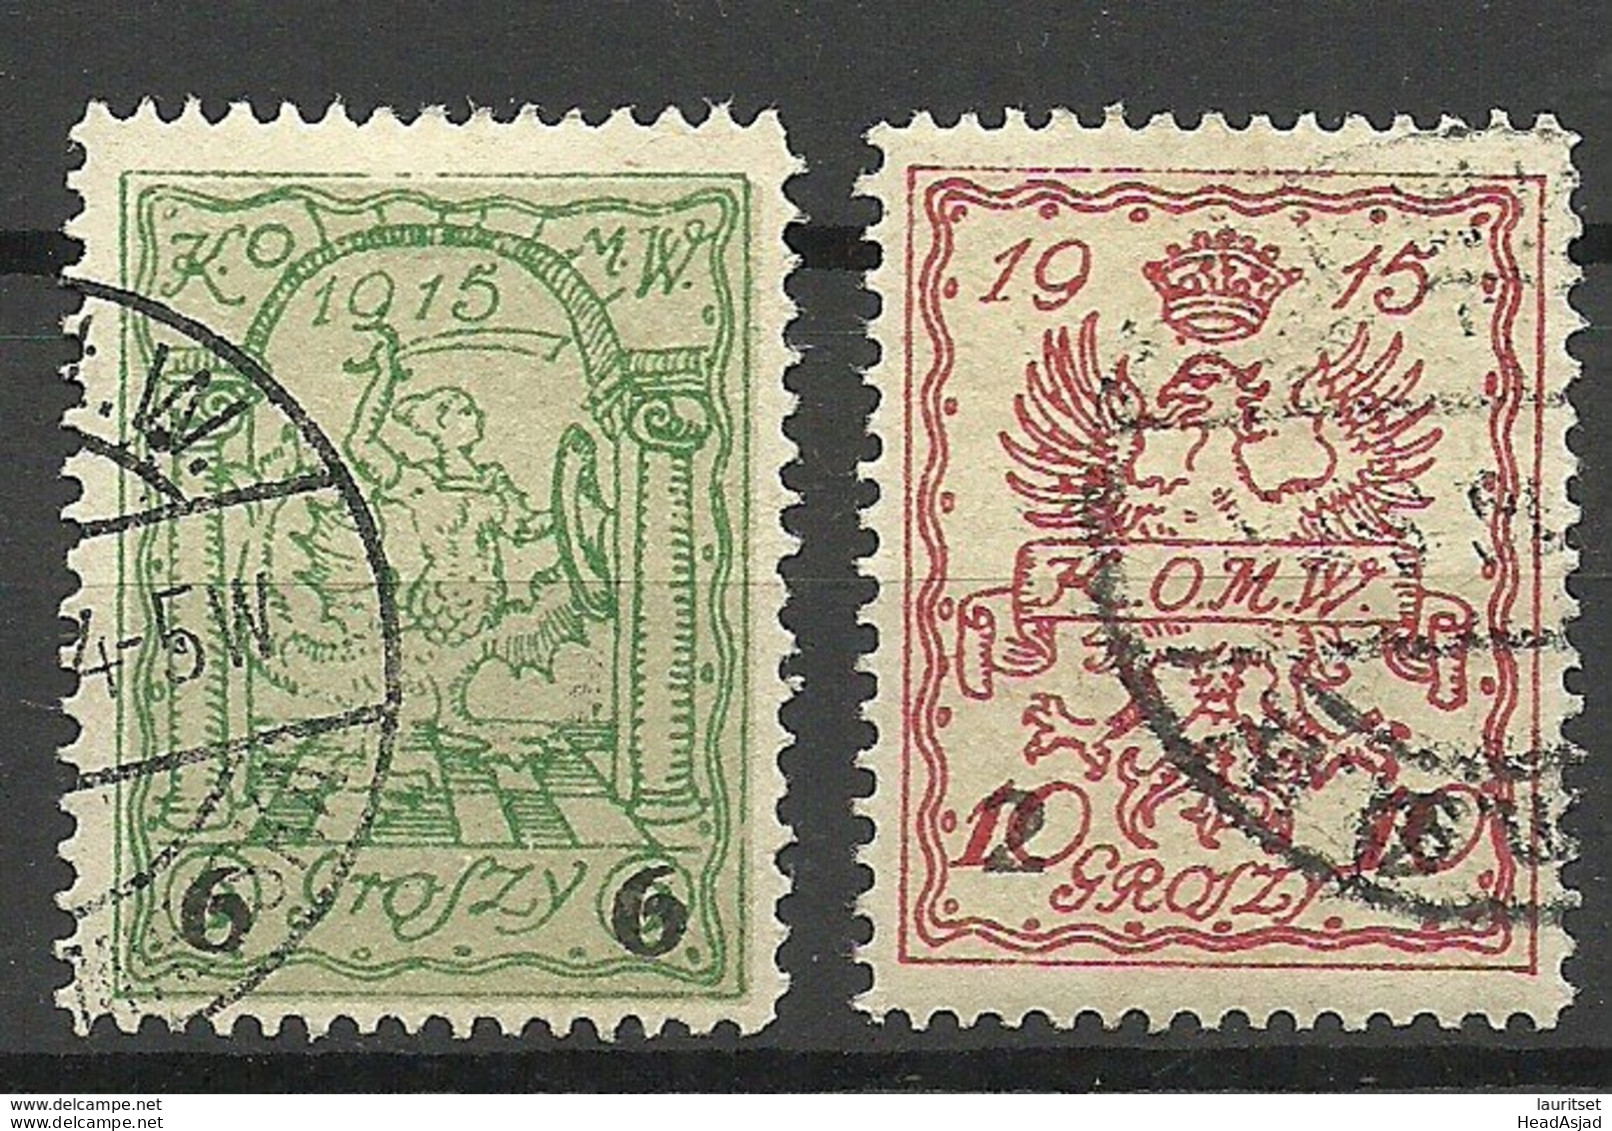 POLEN Poland 1915 Stadtpost Warschau Local City Post Michel 5 B & 6 I B O - Used Stamps